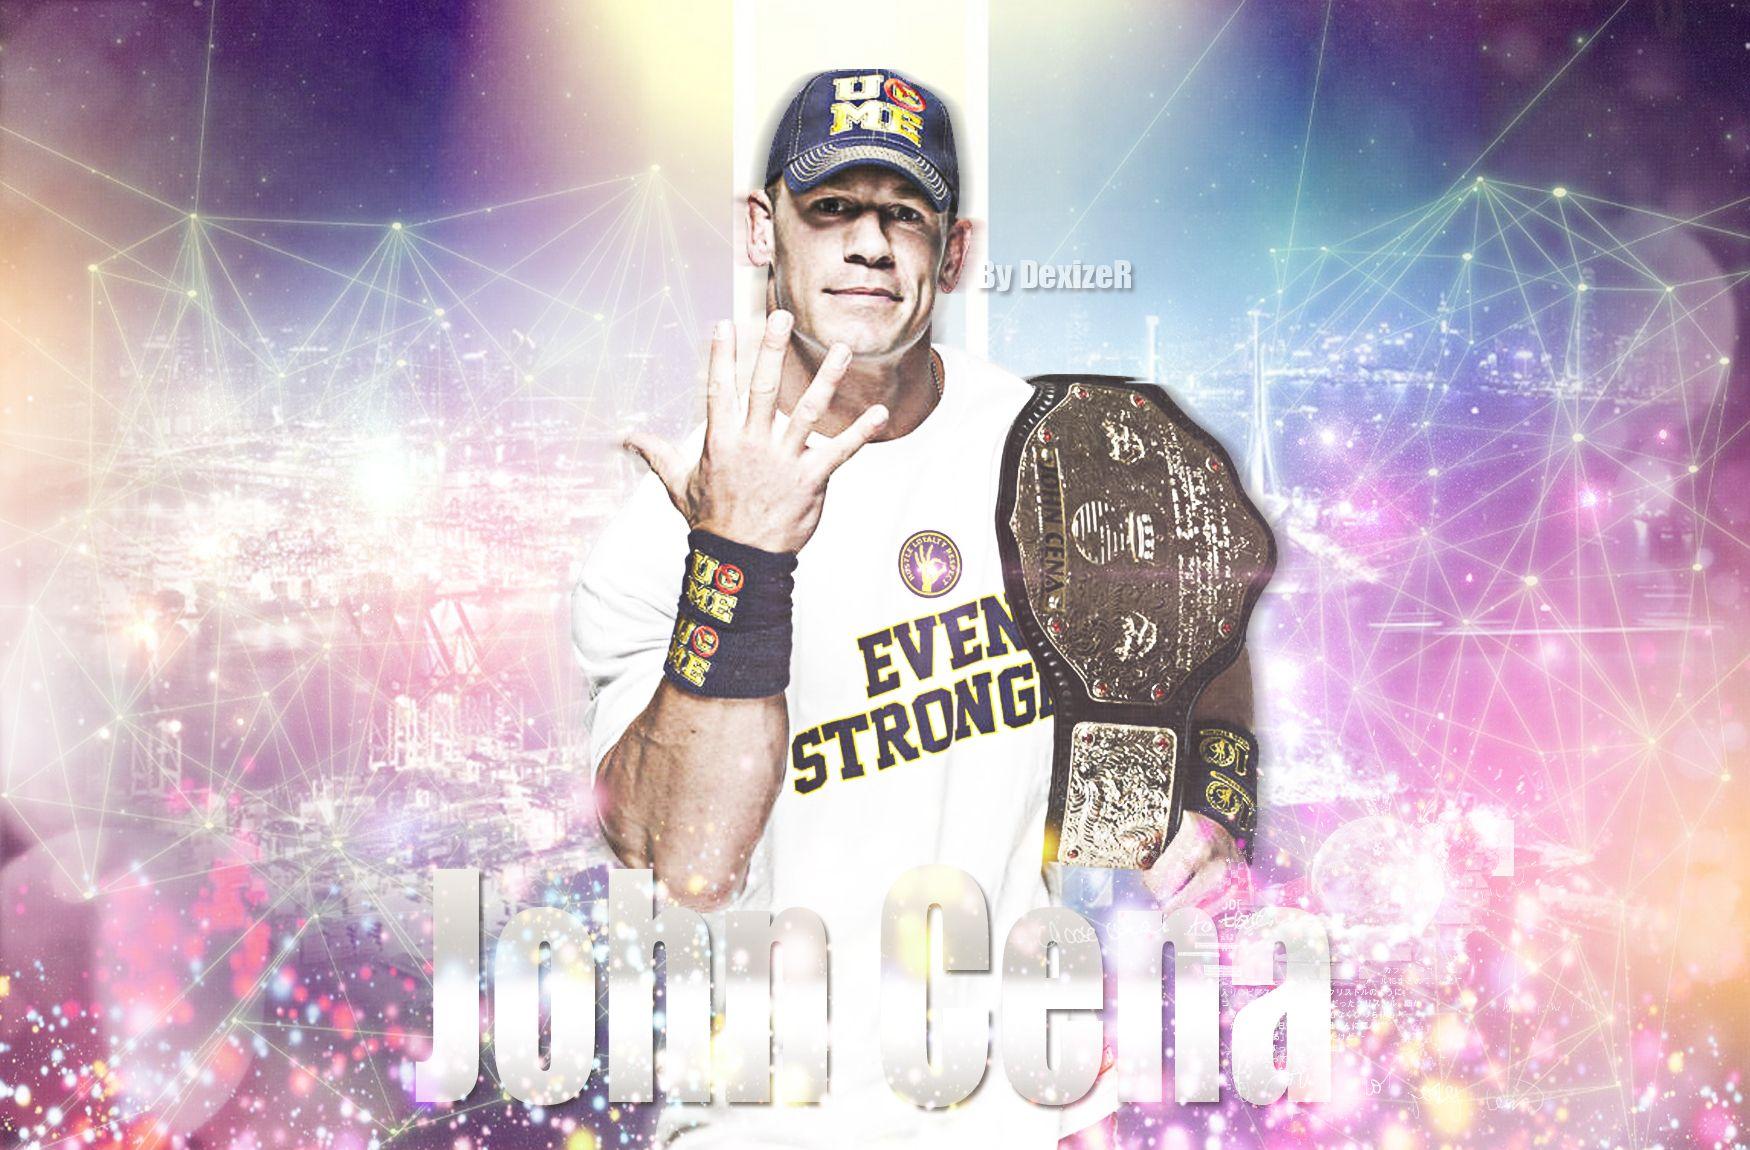 John Cena Full HD 1080p Image Photo Pics Wallpaper